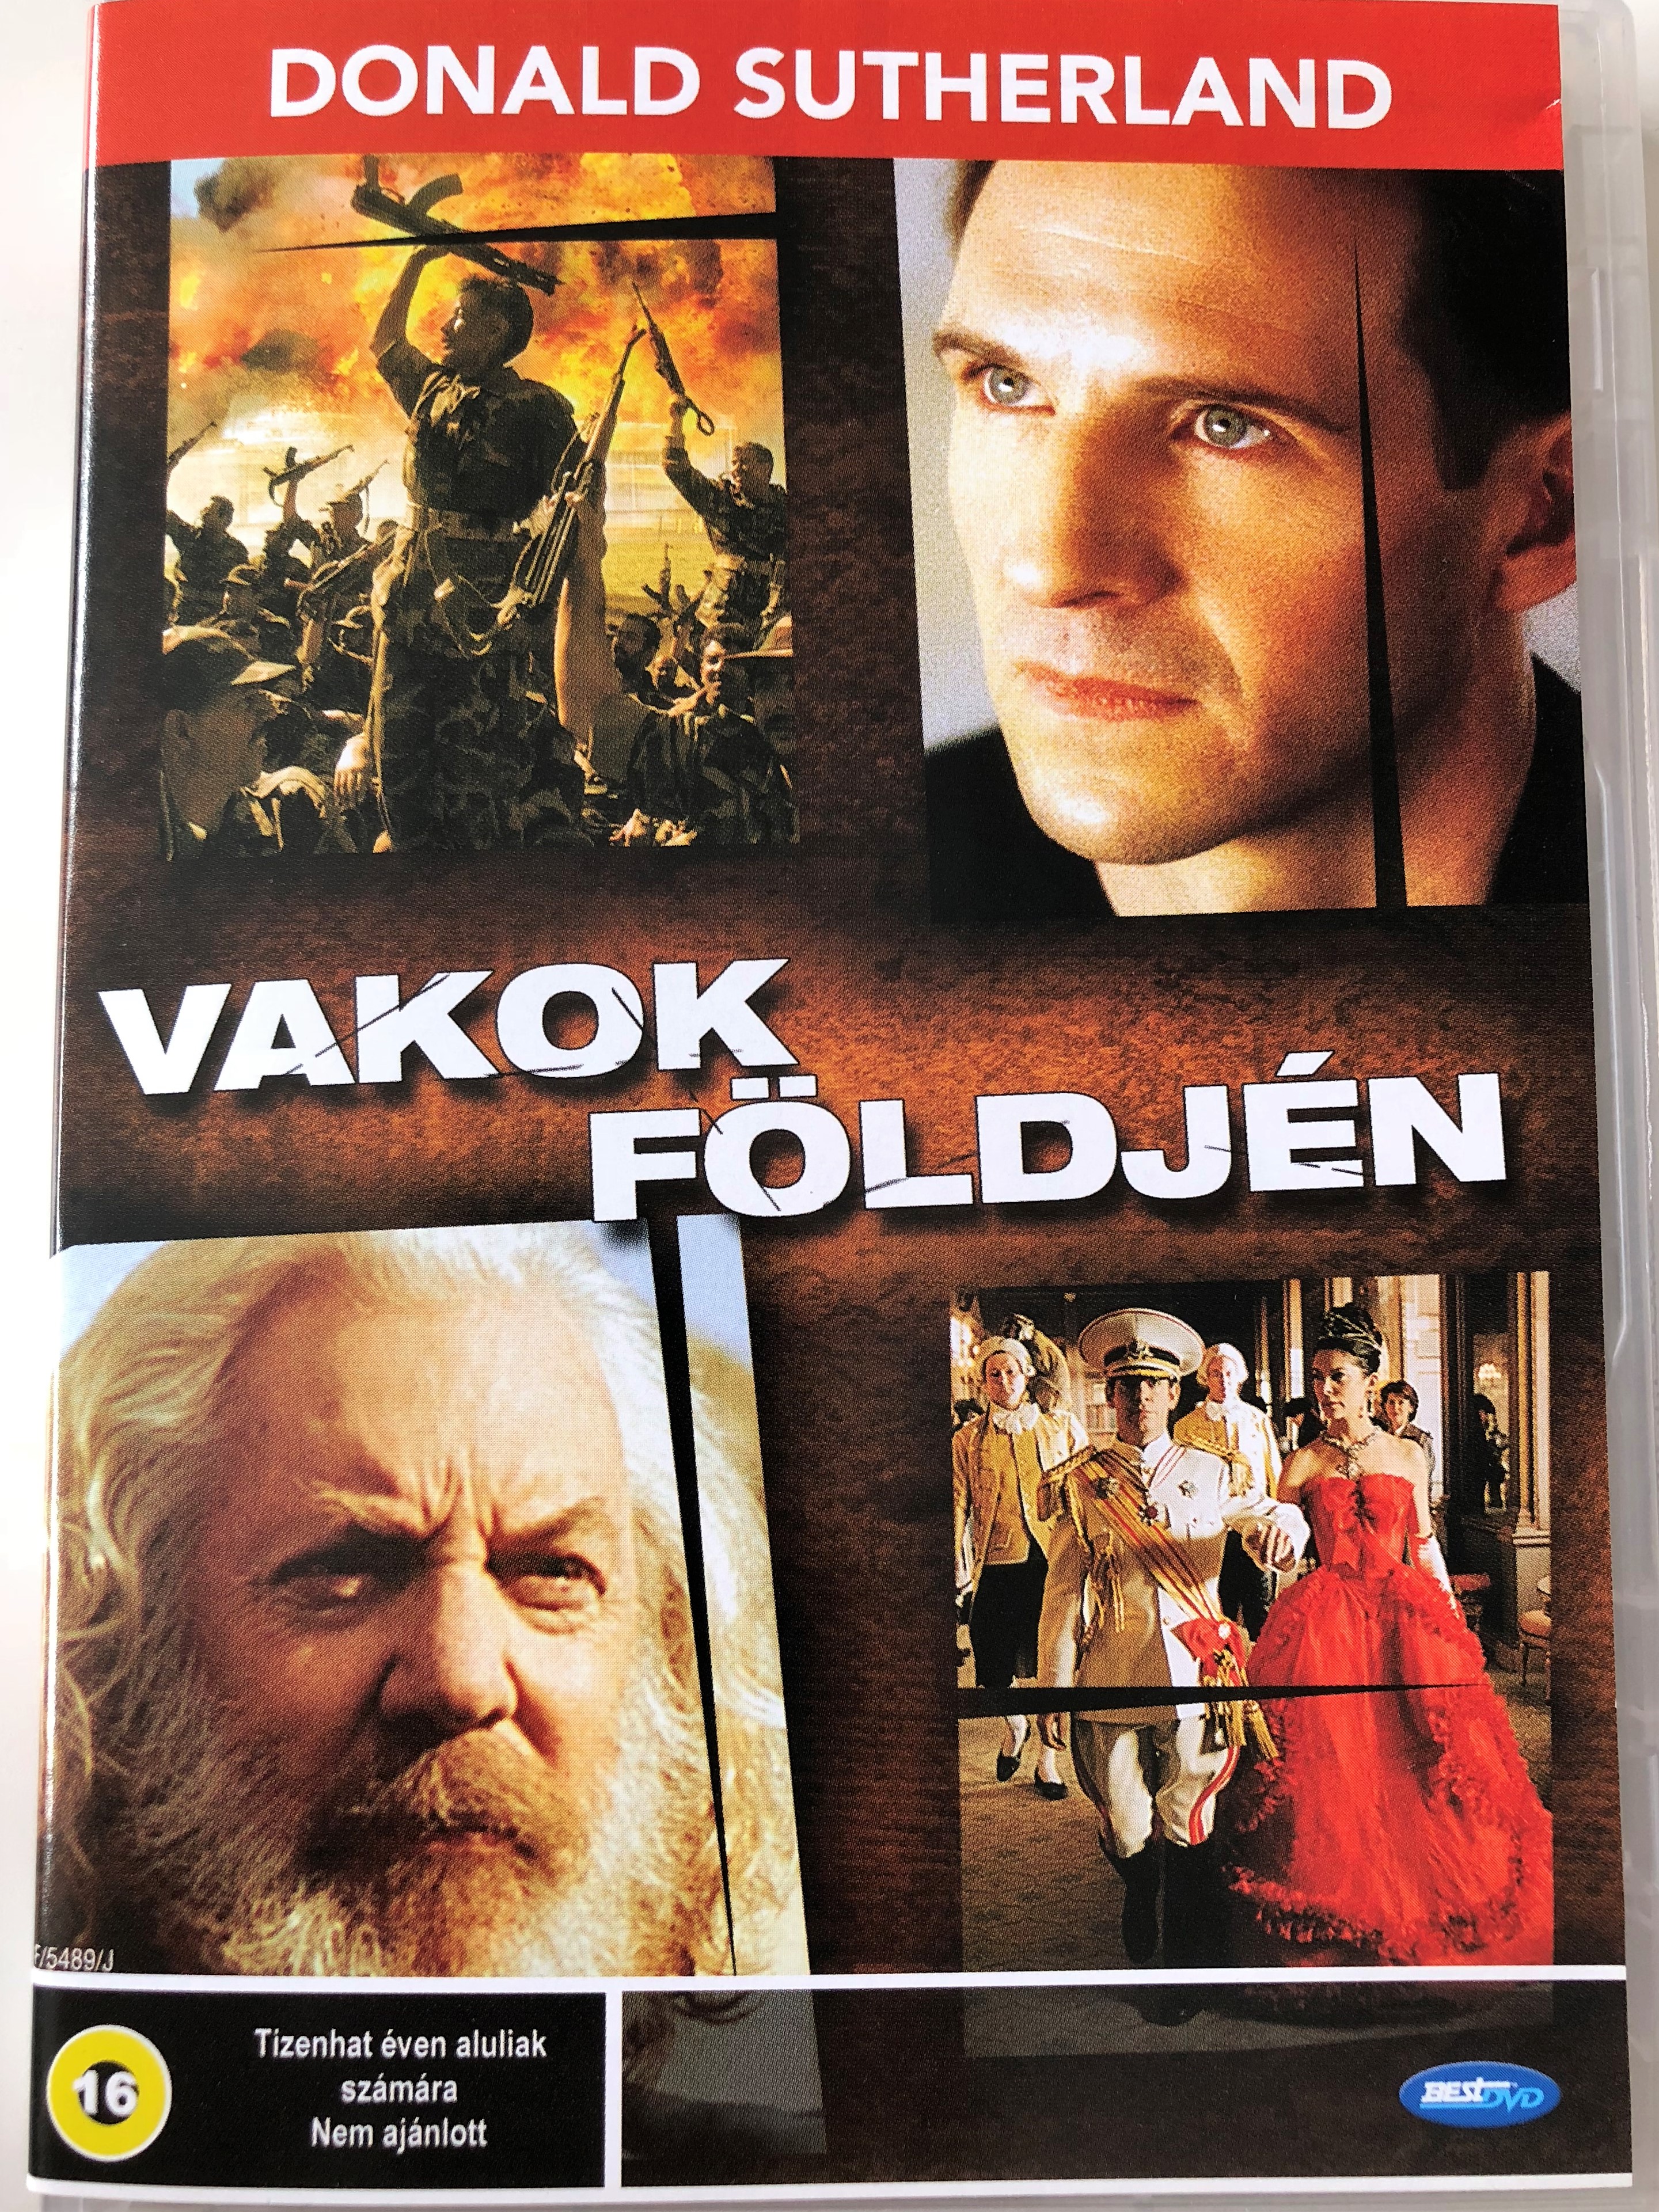 land-of-the-blind-dvd-2006-vakok-f-ldj-n-directed-by-robert-edwards-starring-donald-sutherland-ralph-fiennes-tom-hollander-marc-warren-lara-flynn-boyle-1-.jpg